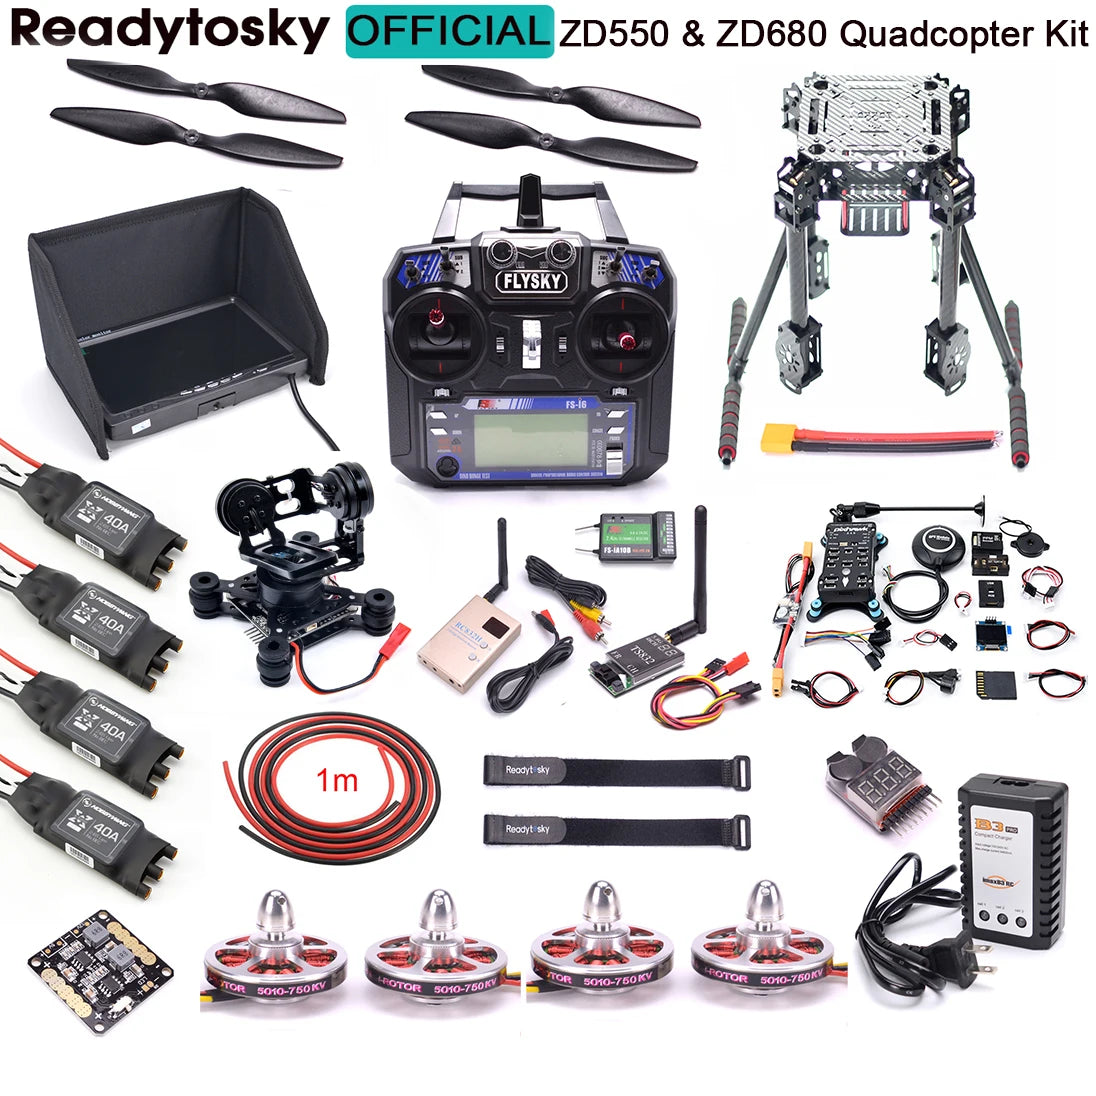 ZD550 550mm / ZD680 680mm Carbon Fiber Quadcopter, Readytosky FS-16 Readyt * Im Rcoayt 5010-750